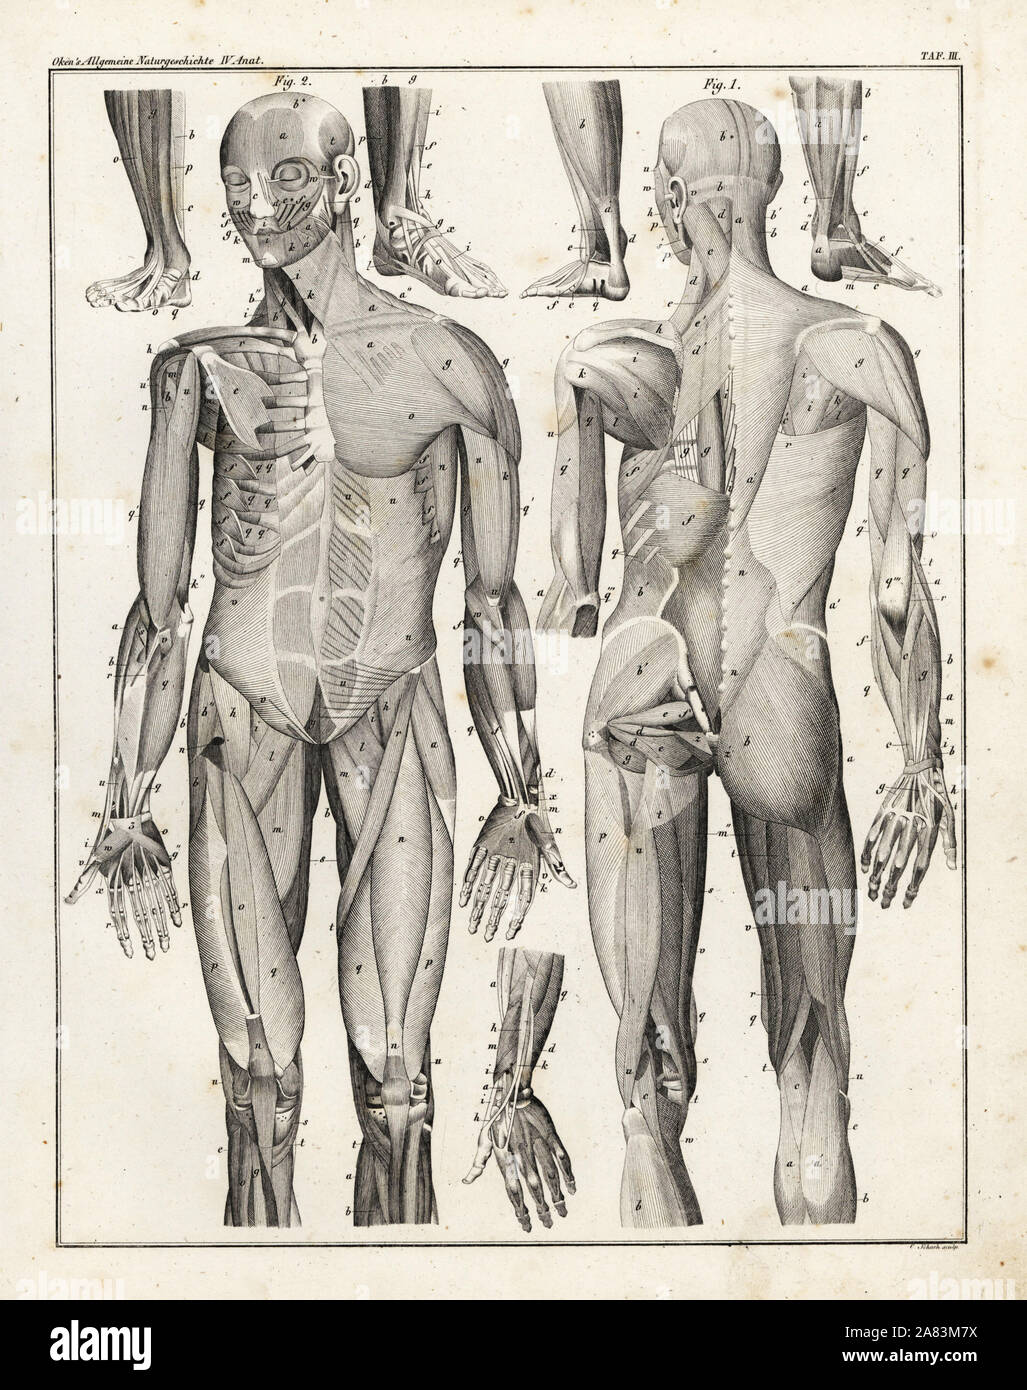 Anatomia della muscolatura umana. Litografia da C. Schach da Lorenz Oken universale della storia naturale, Allgemeine Naturgeschichte fur alle Stande, Stuttgart, 1839. Foto Stock